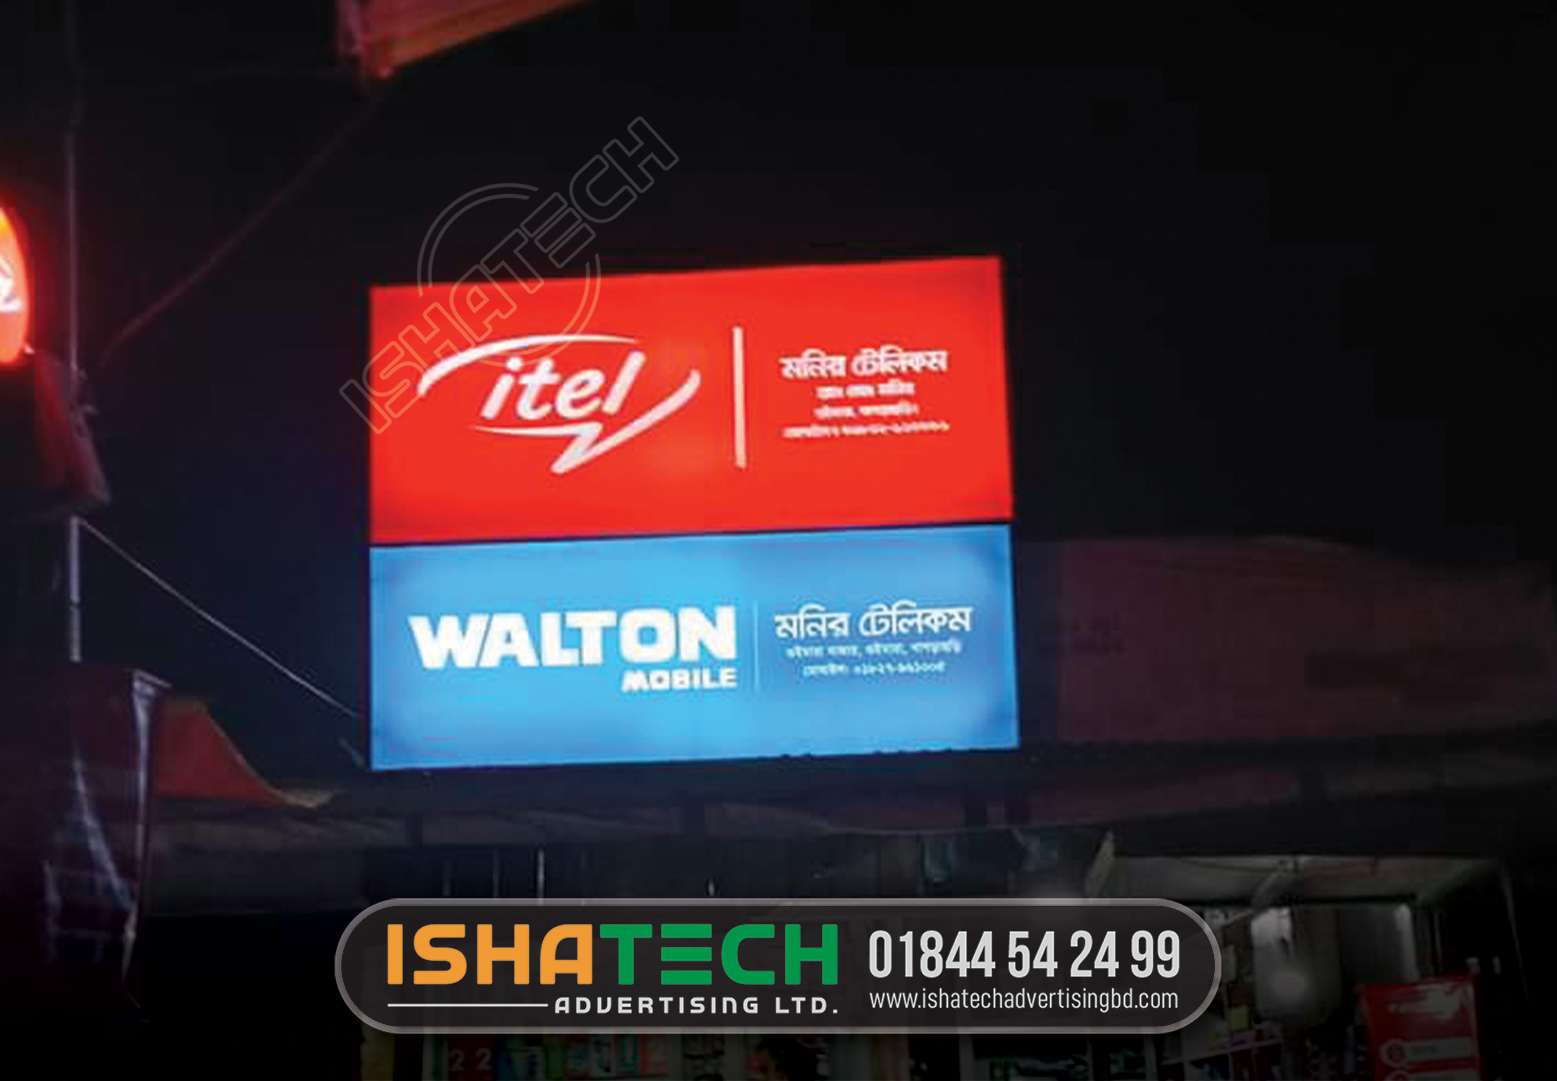 ITEL PHONE COMPANY PANA SIGNBOARD, WALTON PROFILE SIGNBOARD MAKING IN DHAKA BANGLADESH